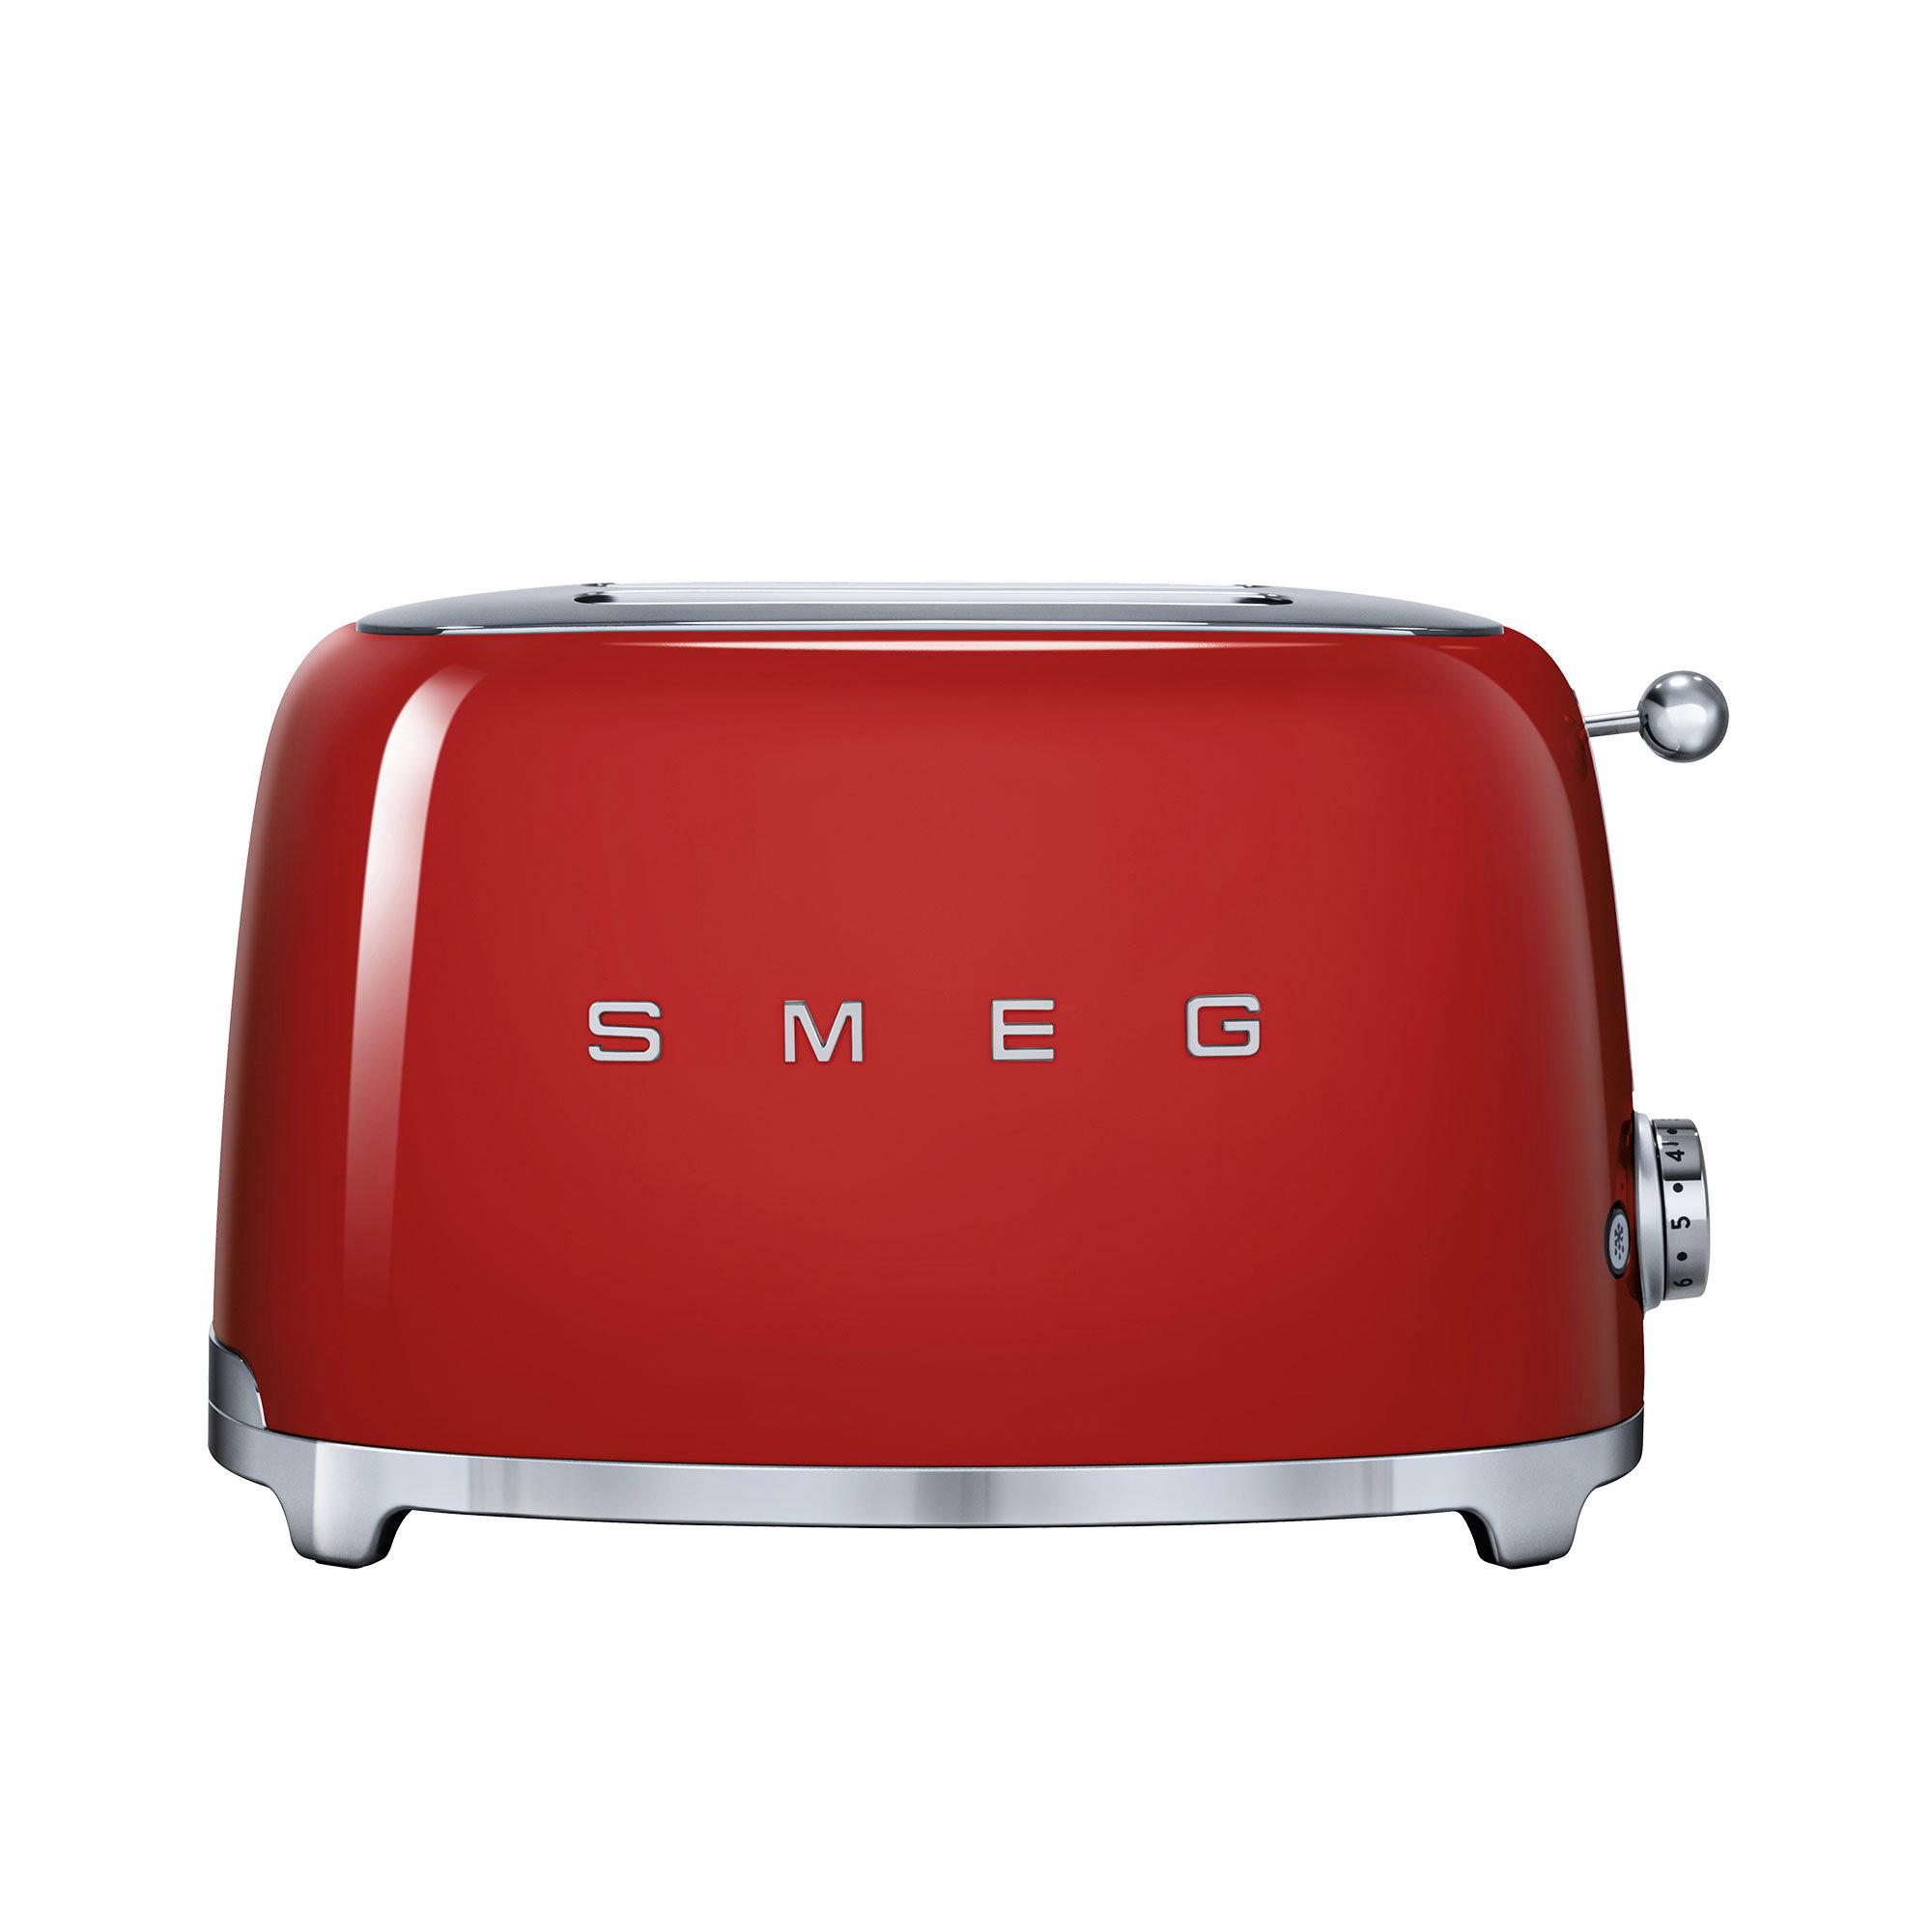 Smeg 50's Retro Style 2 Slice Toaster Red Image 3